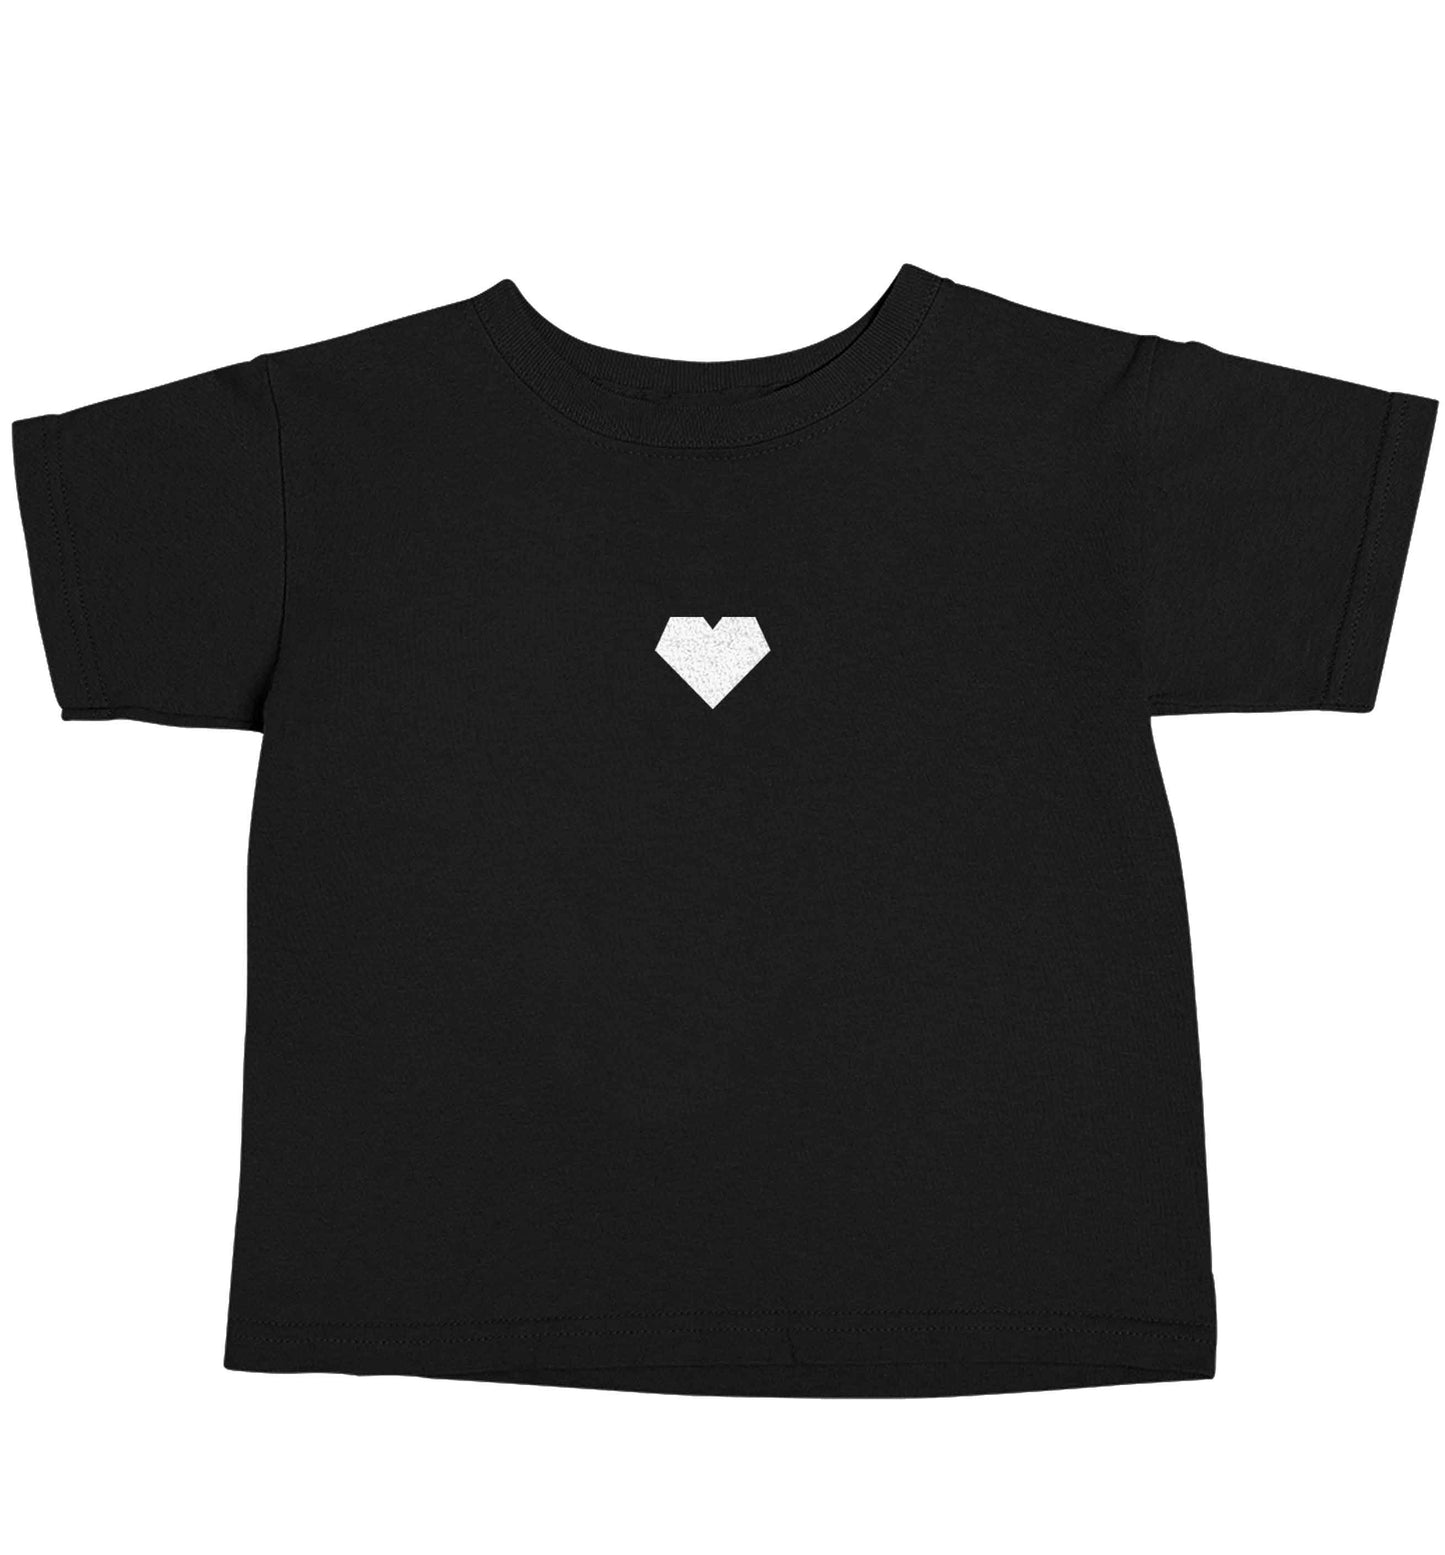 Tiny heart Black baby toddler Tshirt 2 years